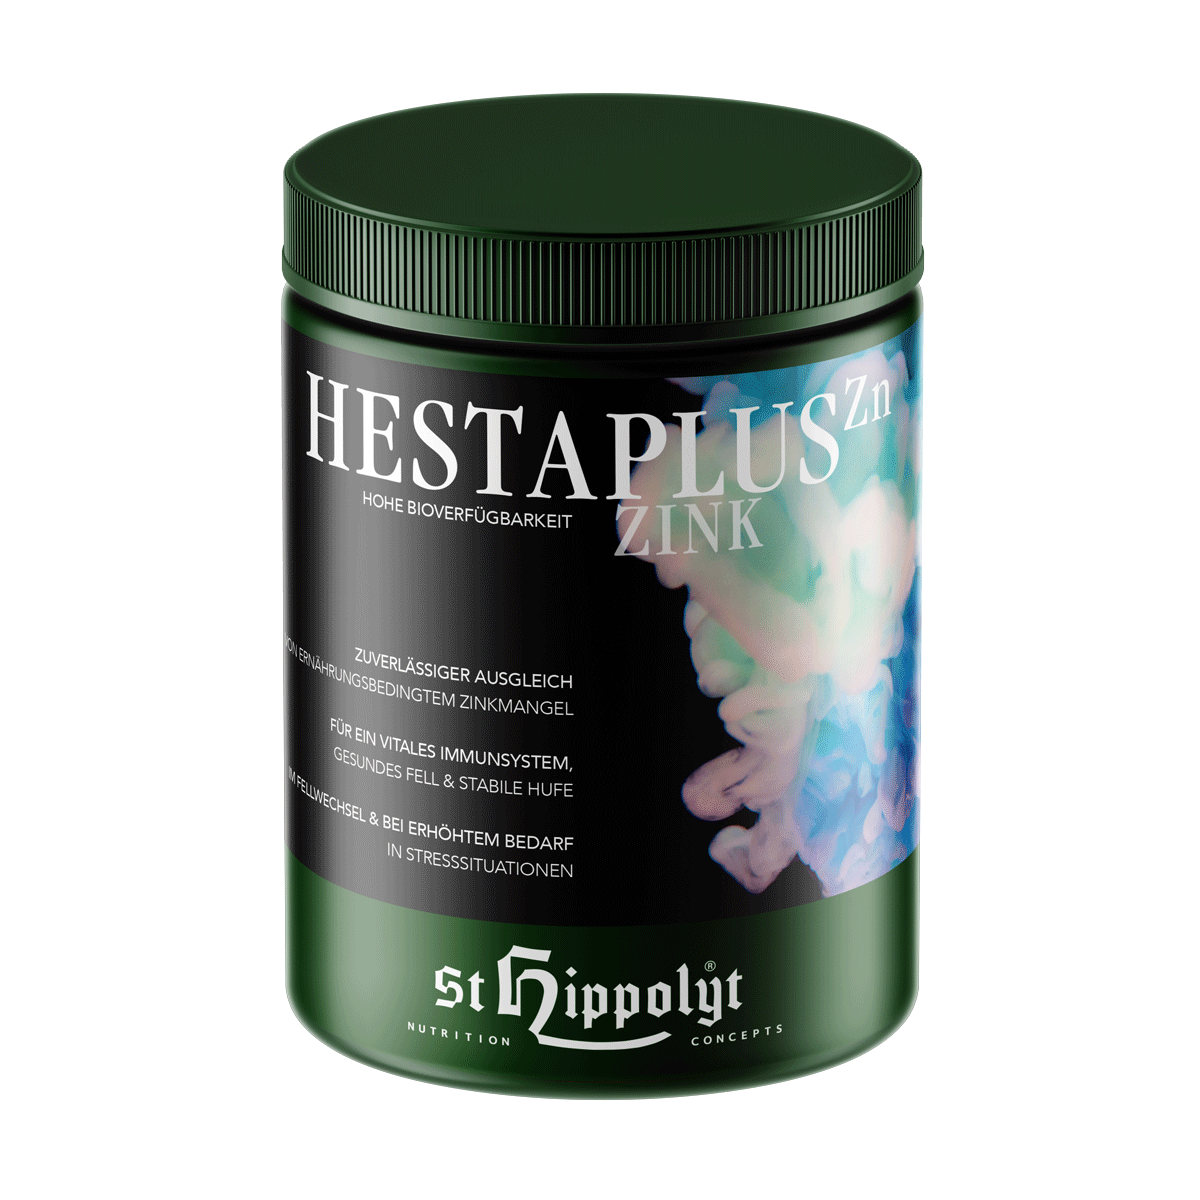 ST. Hippolyt HESTA-Plus ZINK 1kg